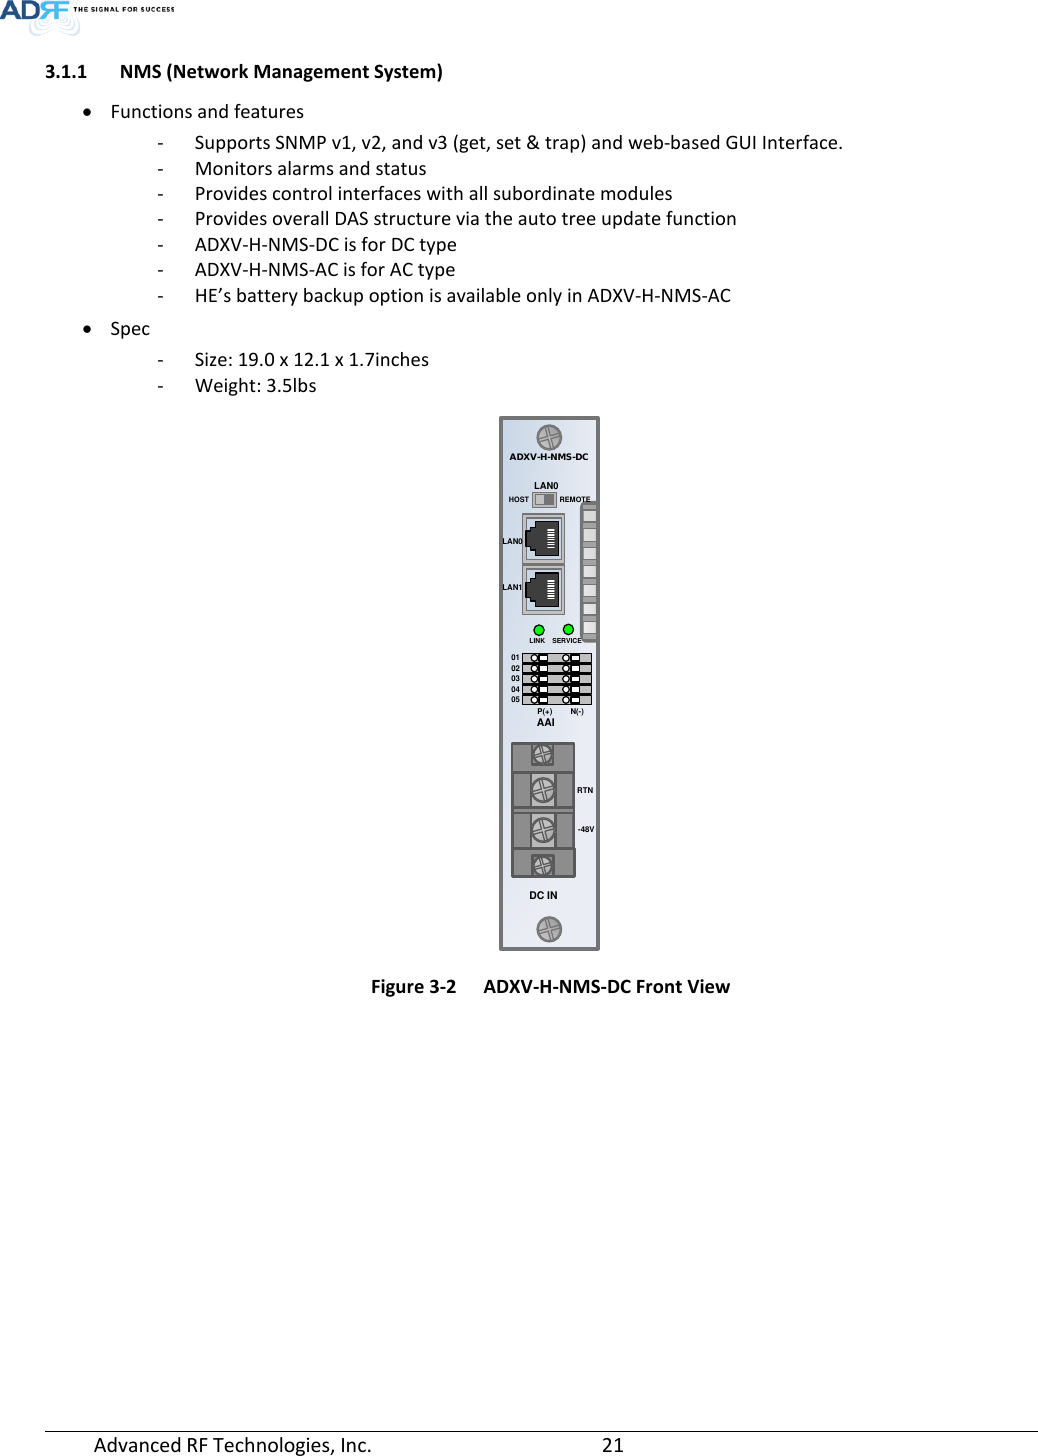 Page 21 of ADRF KOREA ADXV-R-78P-NA DAS (Distributed Antenna System) User Manual ADXV DAS